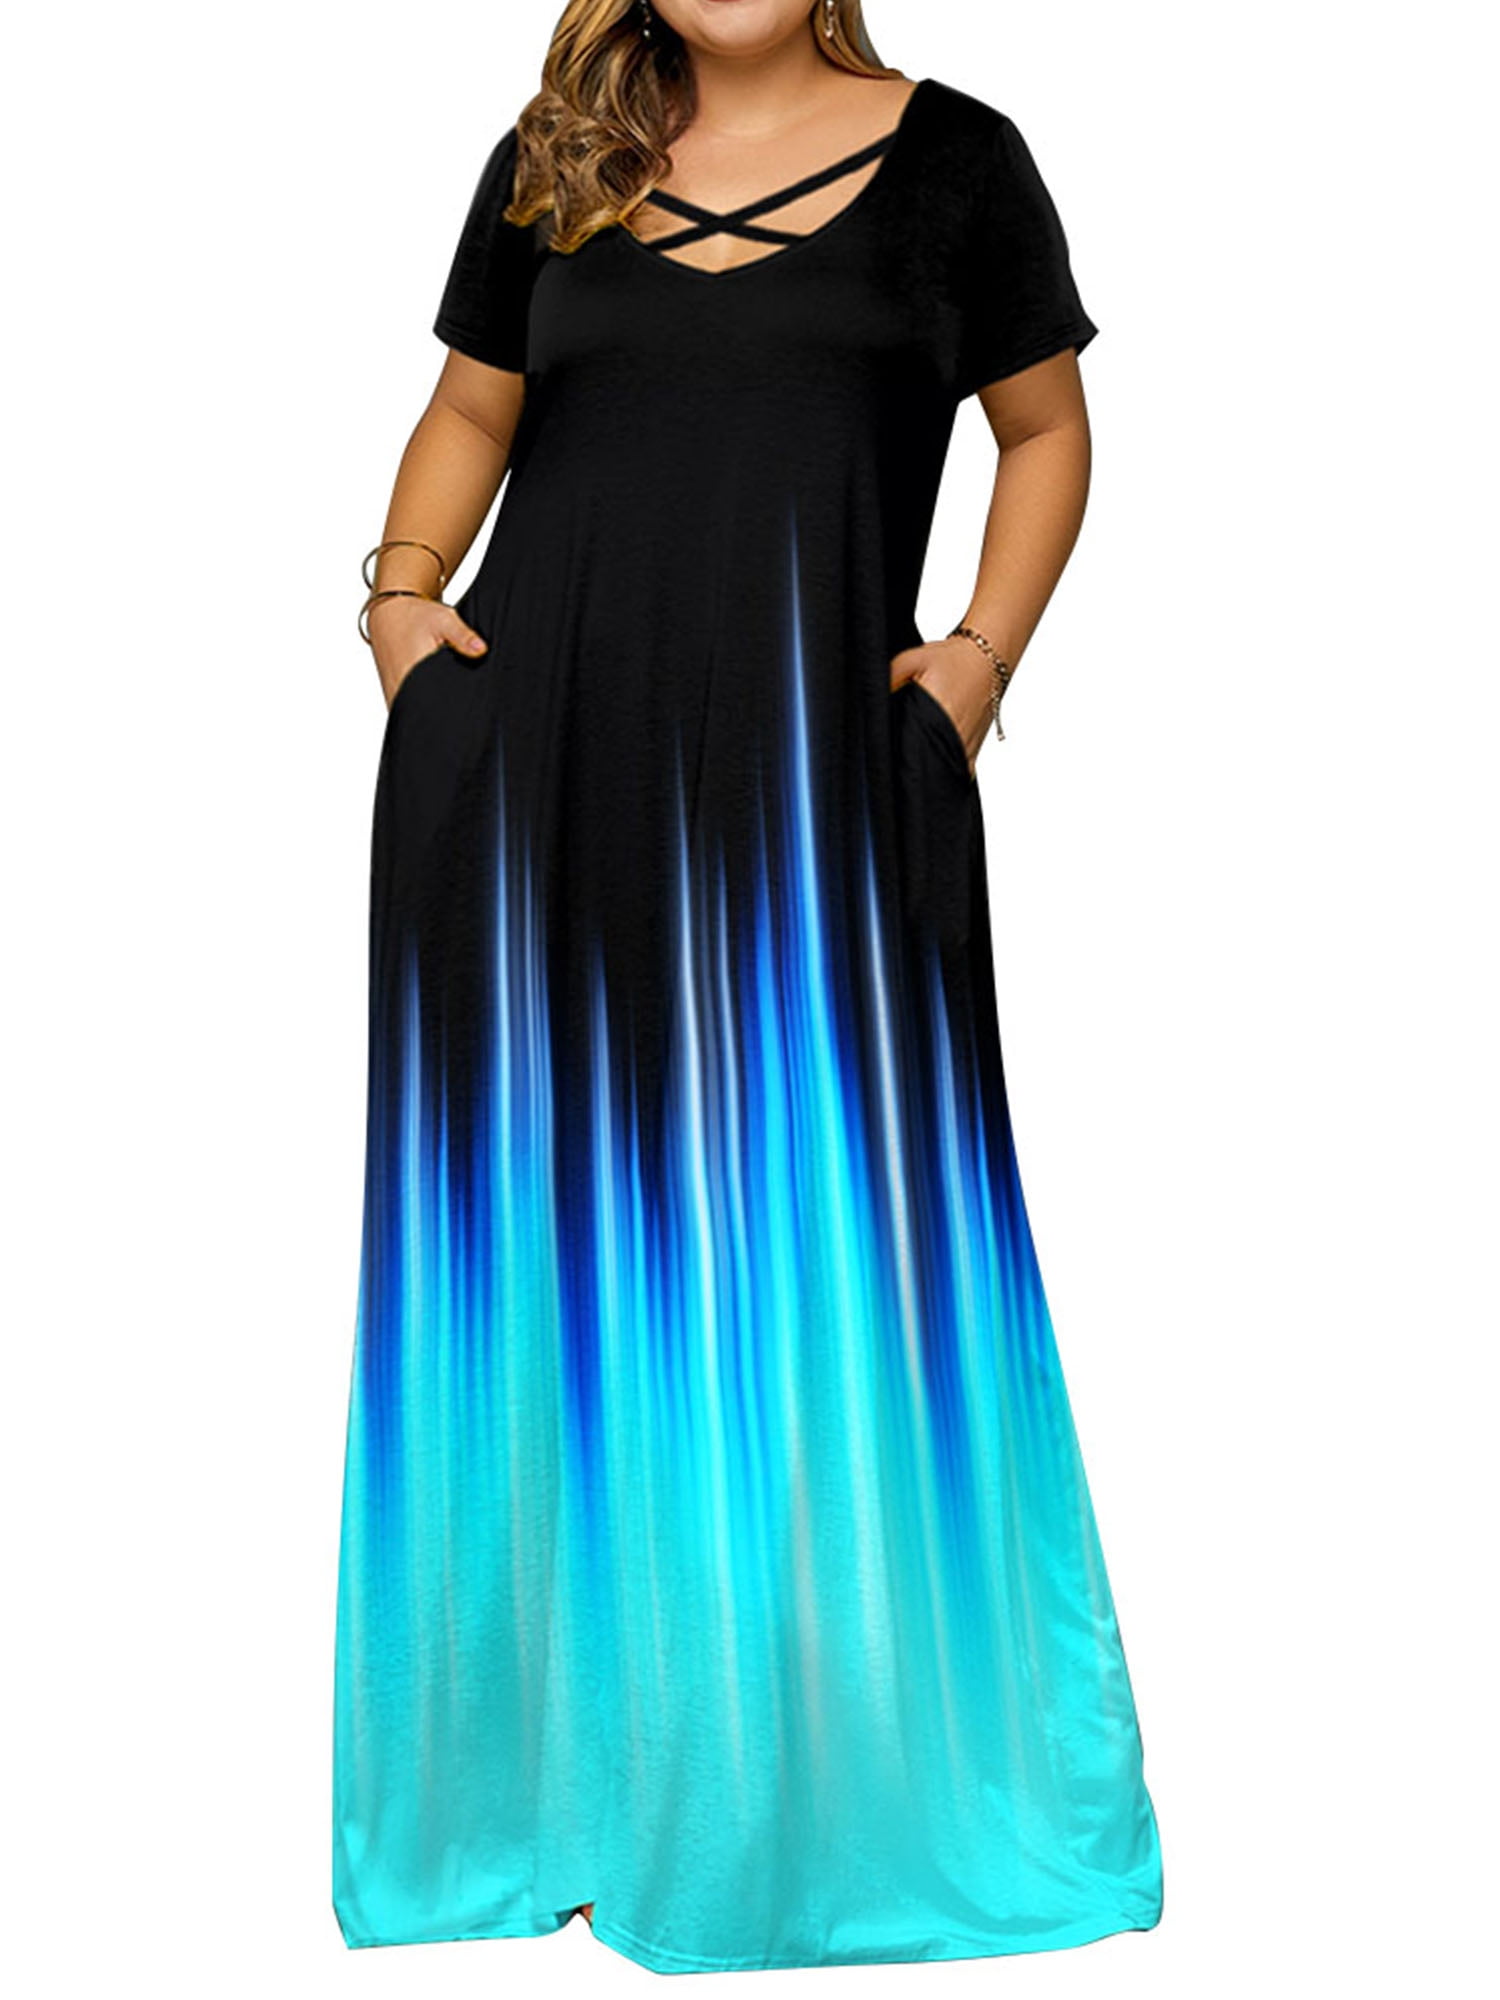 LilyLLL Womens Summer Casual Short Sleeve Printed Kaftan Maxi Dress ...